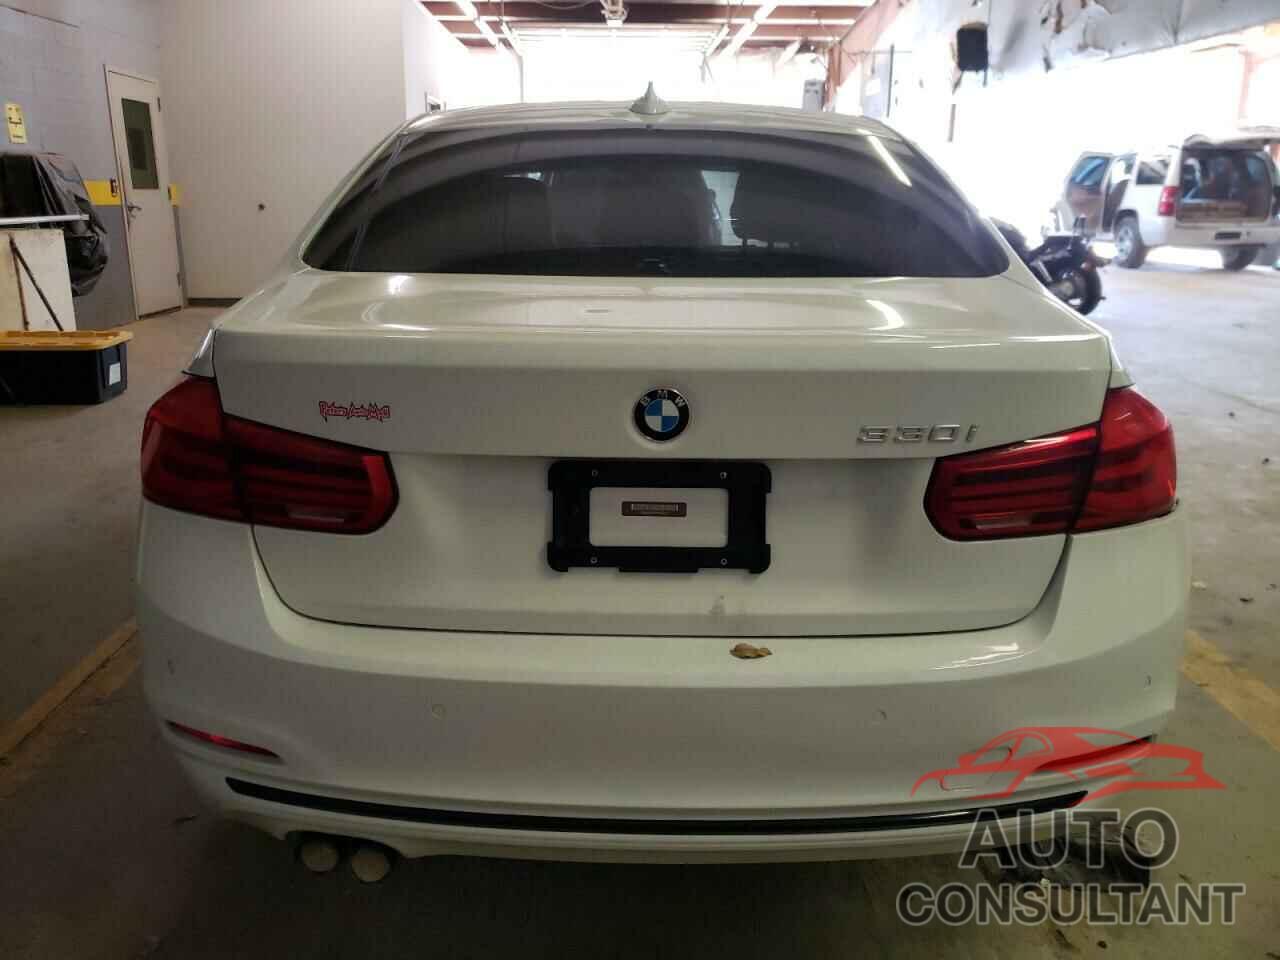 BMW 3 SERIES 2017 - WBA8B9C38HK885181